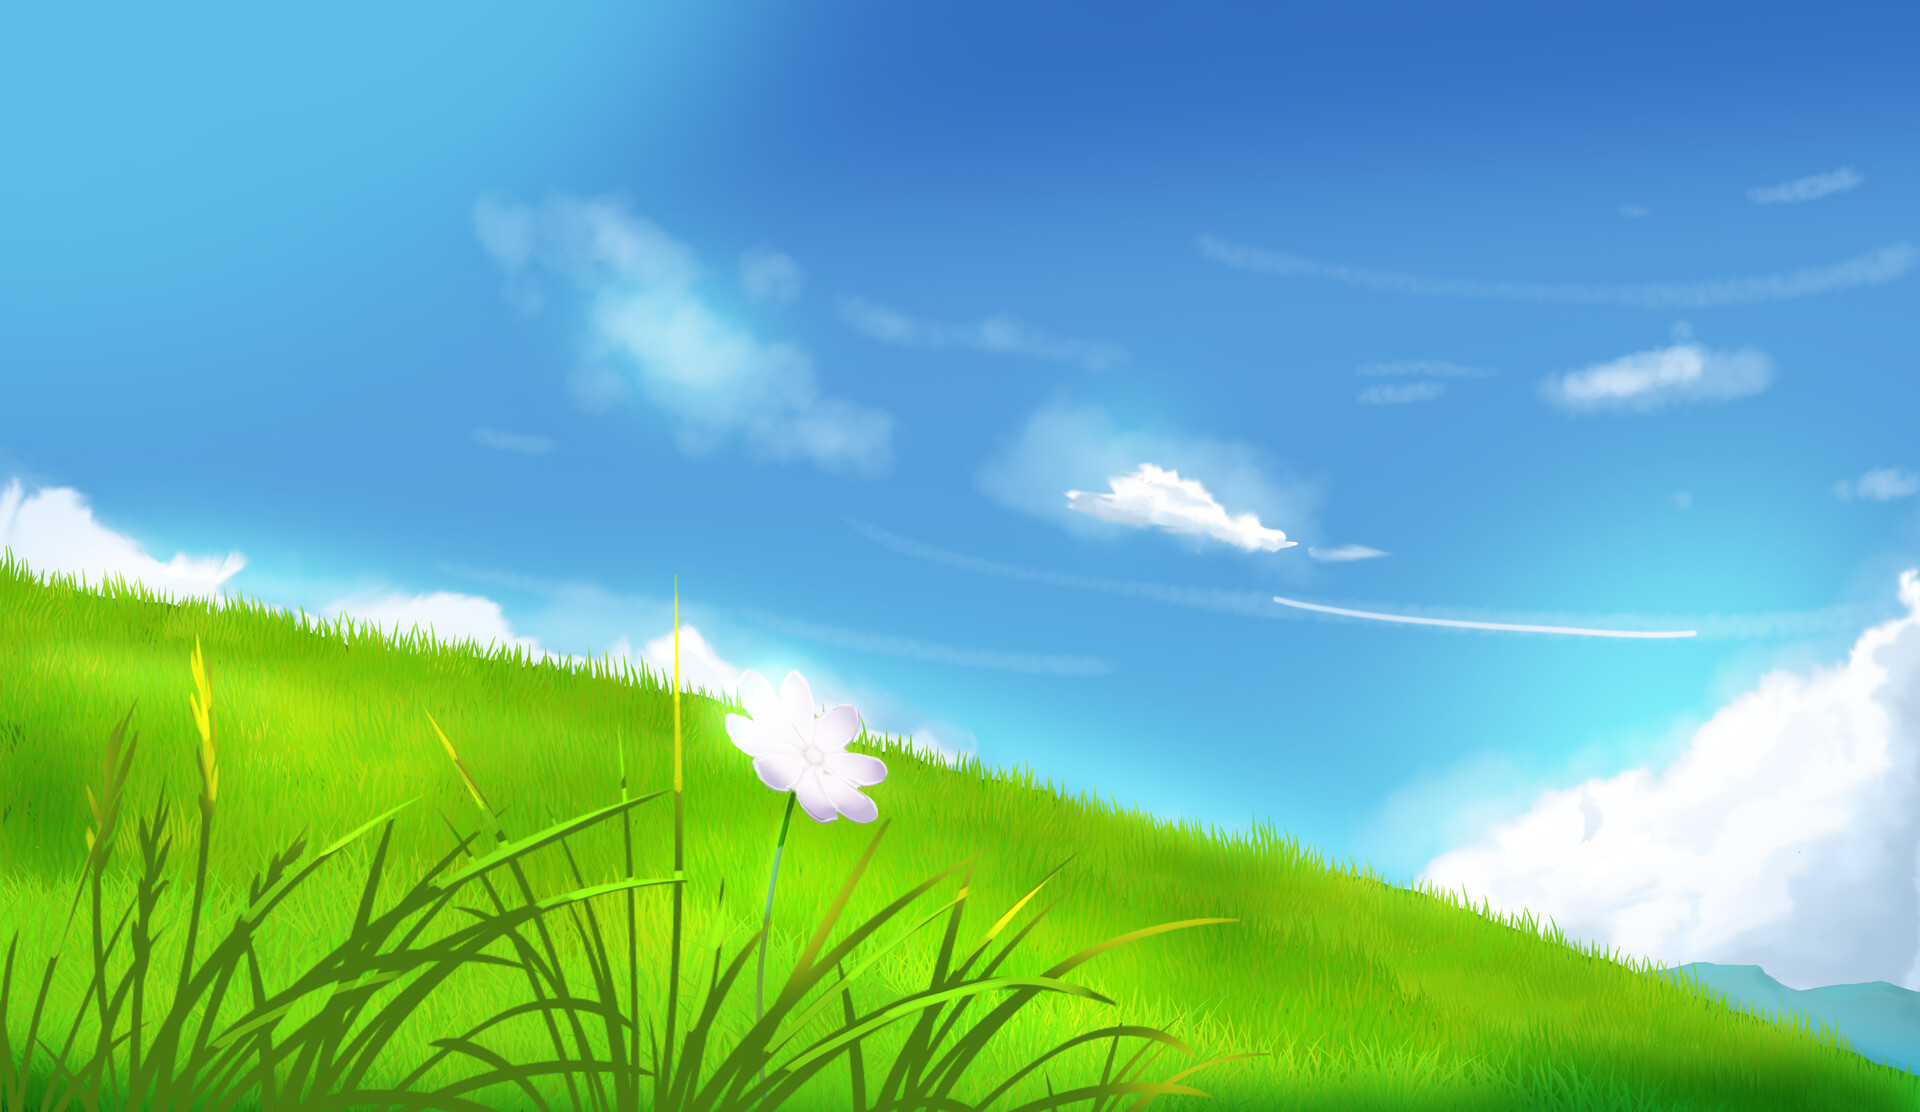 Grassy hill anime background